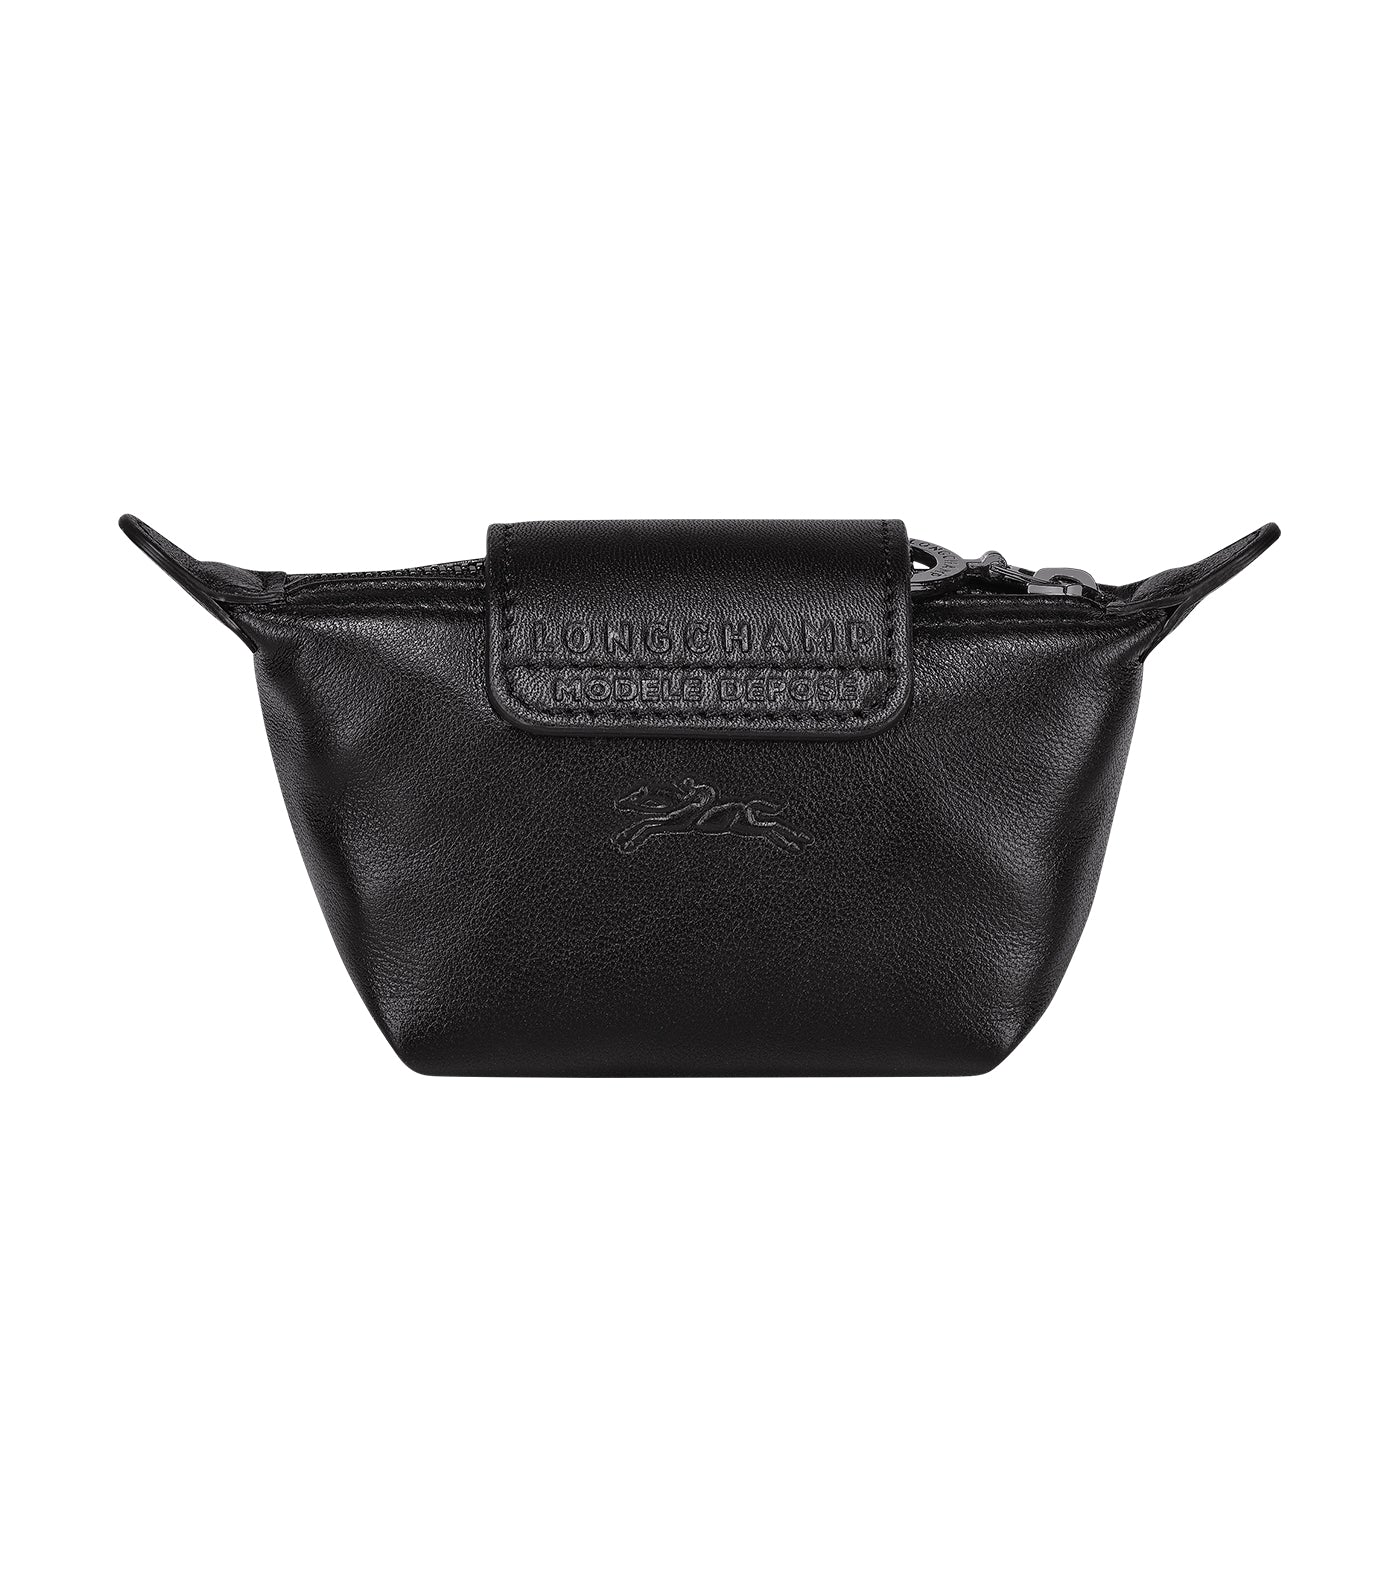 Longchamp Le Pliage Cuir Leather Key Case in Black